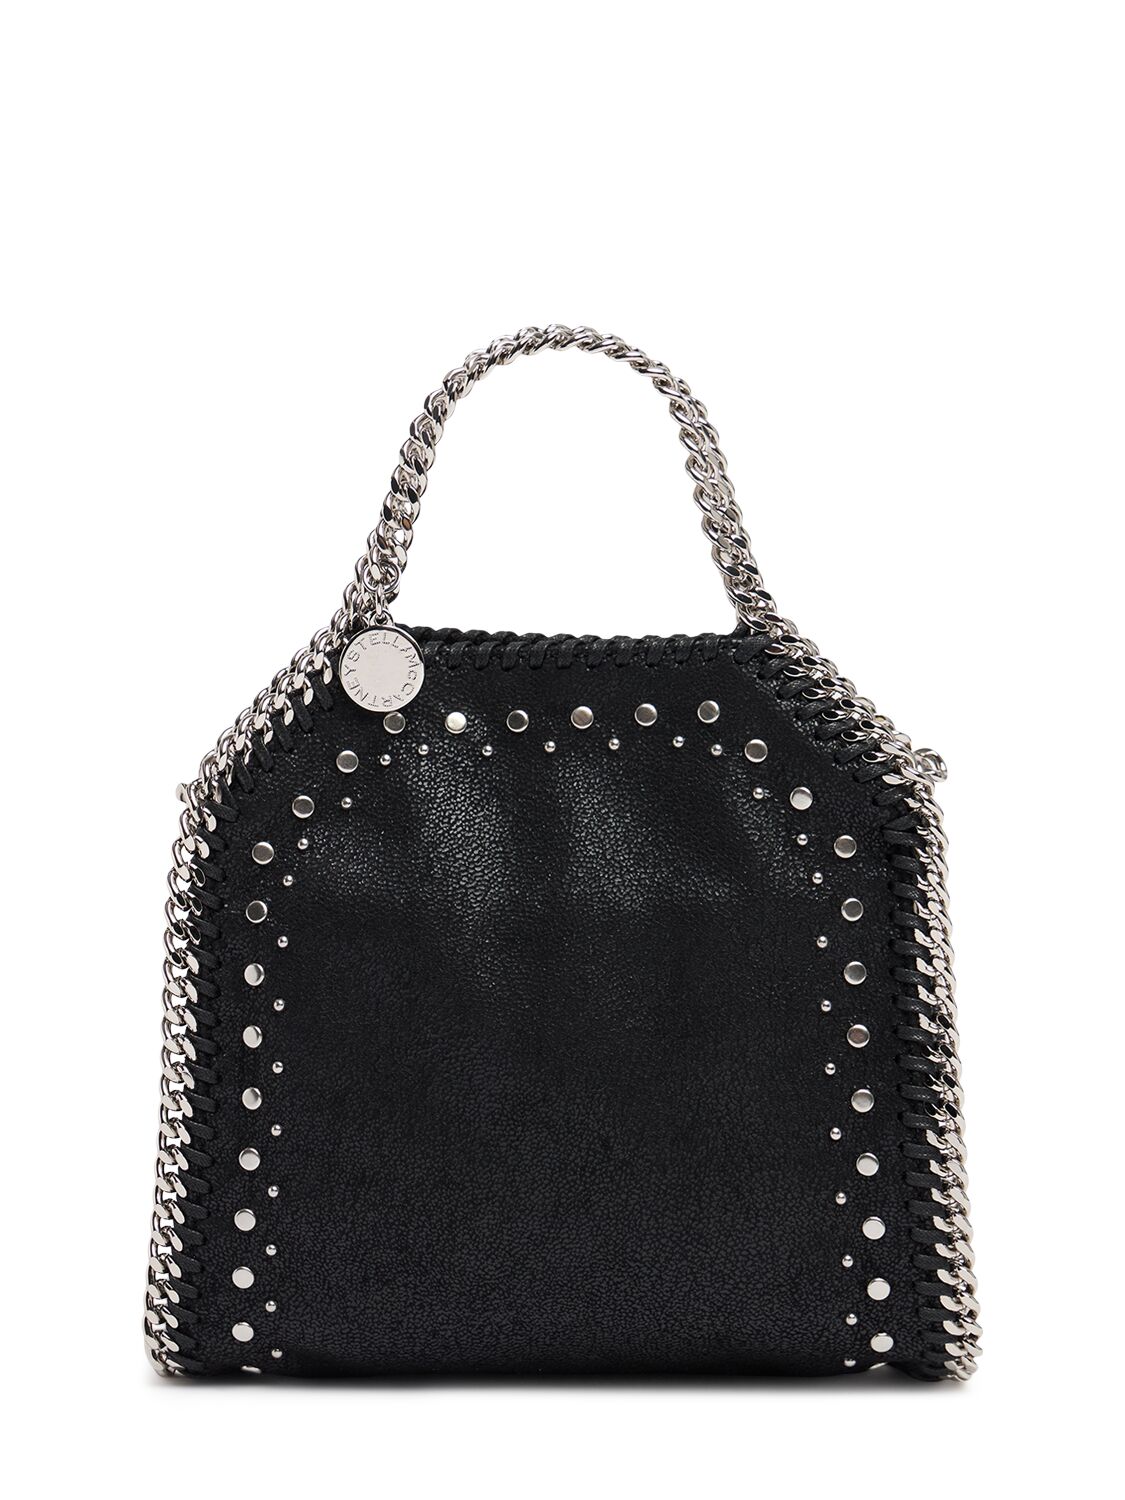 Stella Mccartney Tiny Falabella Studded Bag In Black